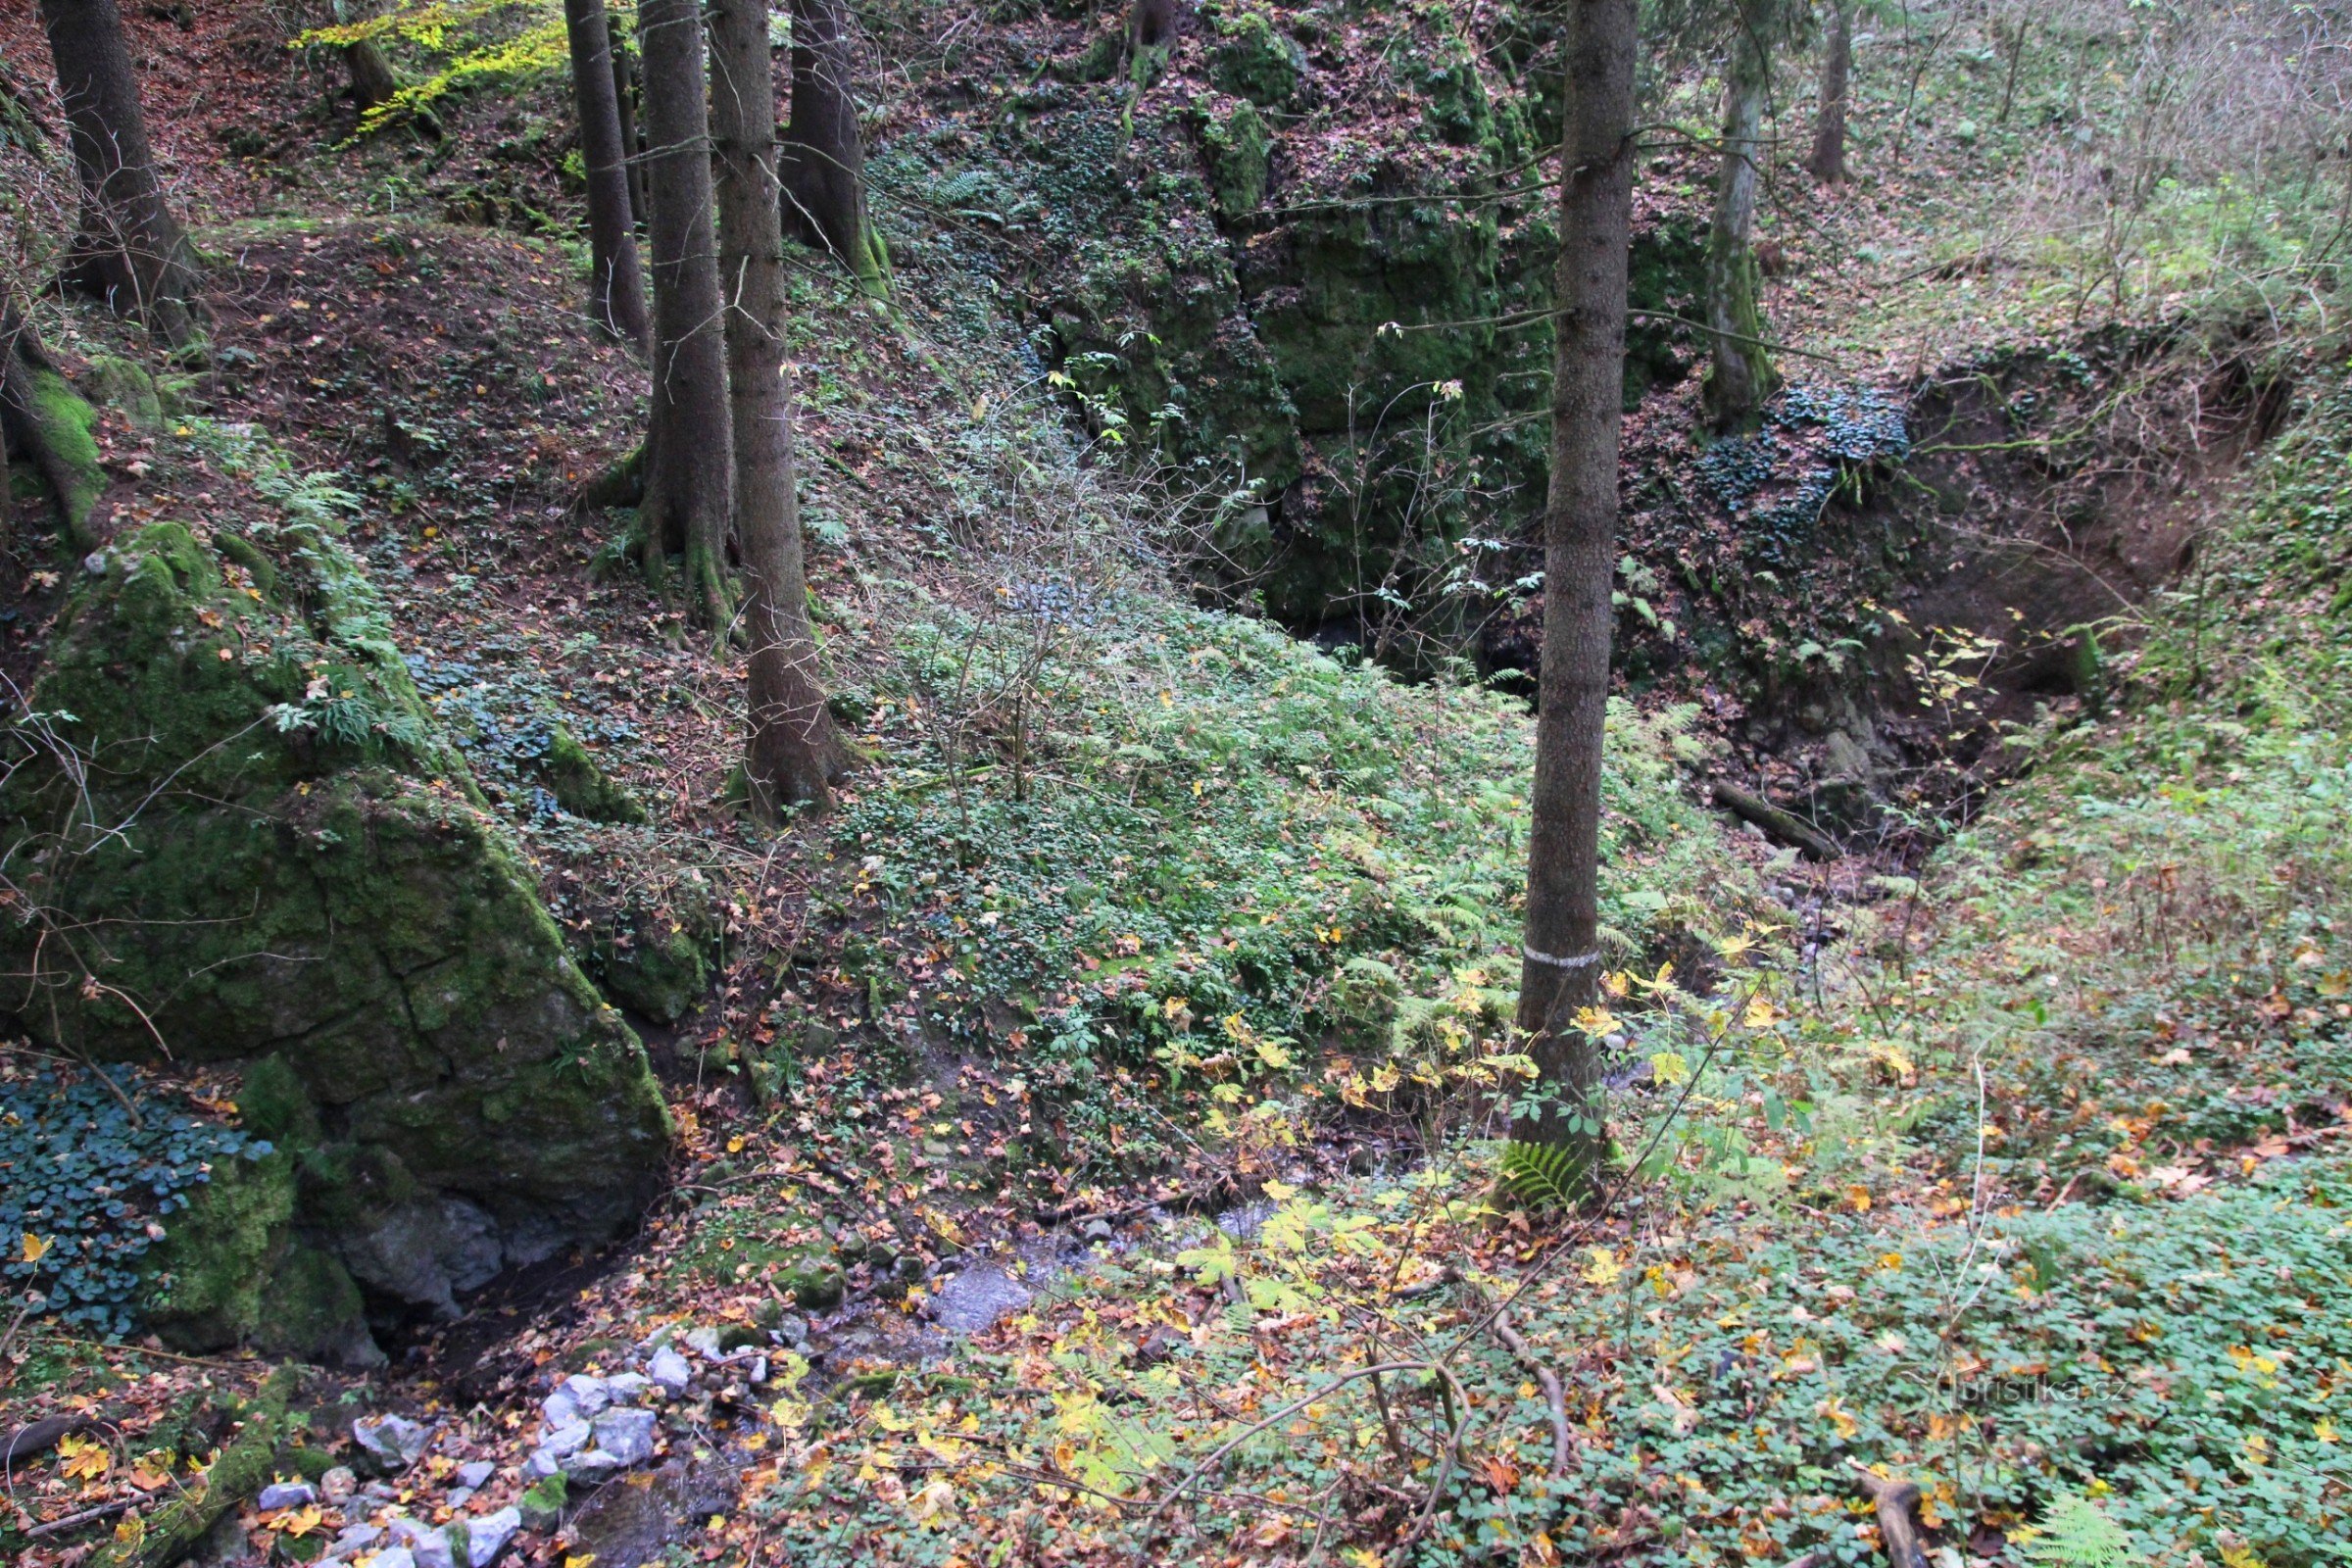 The stream falls under a rock barrier wall